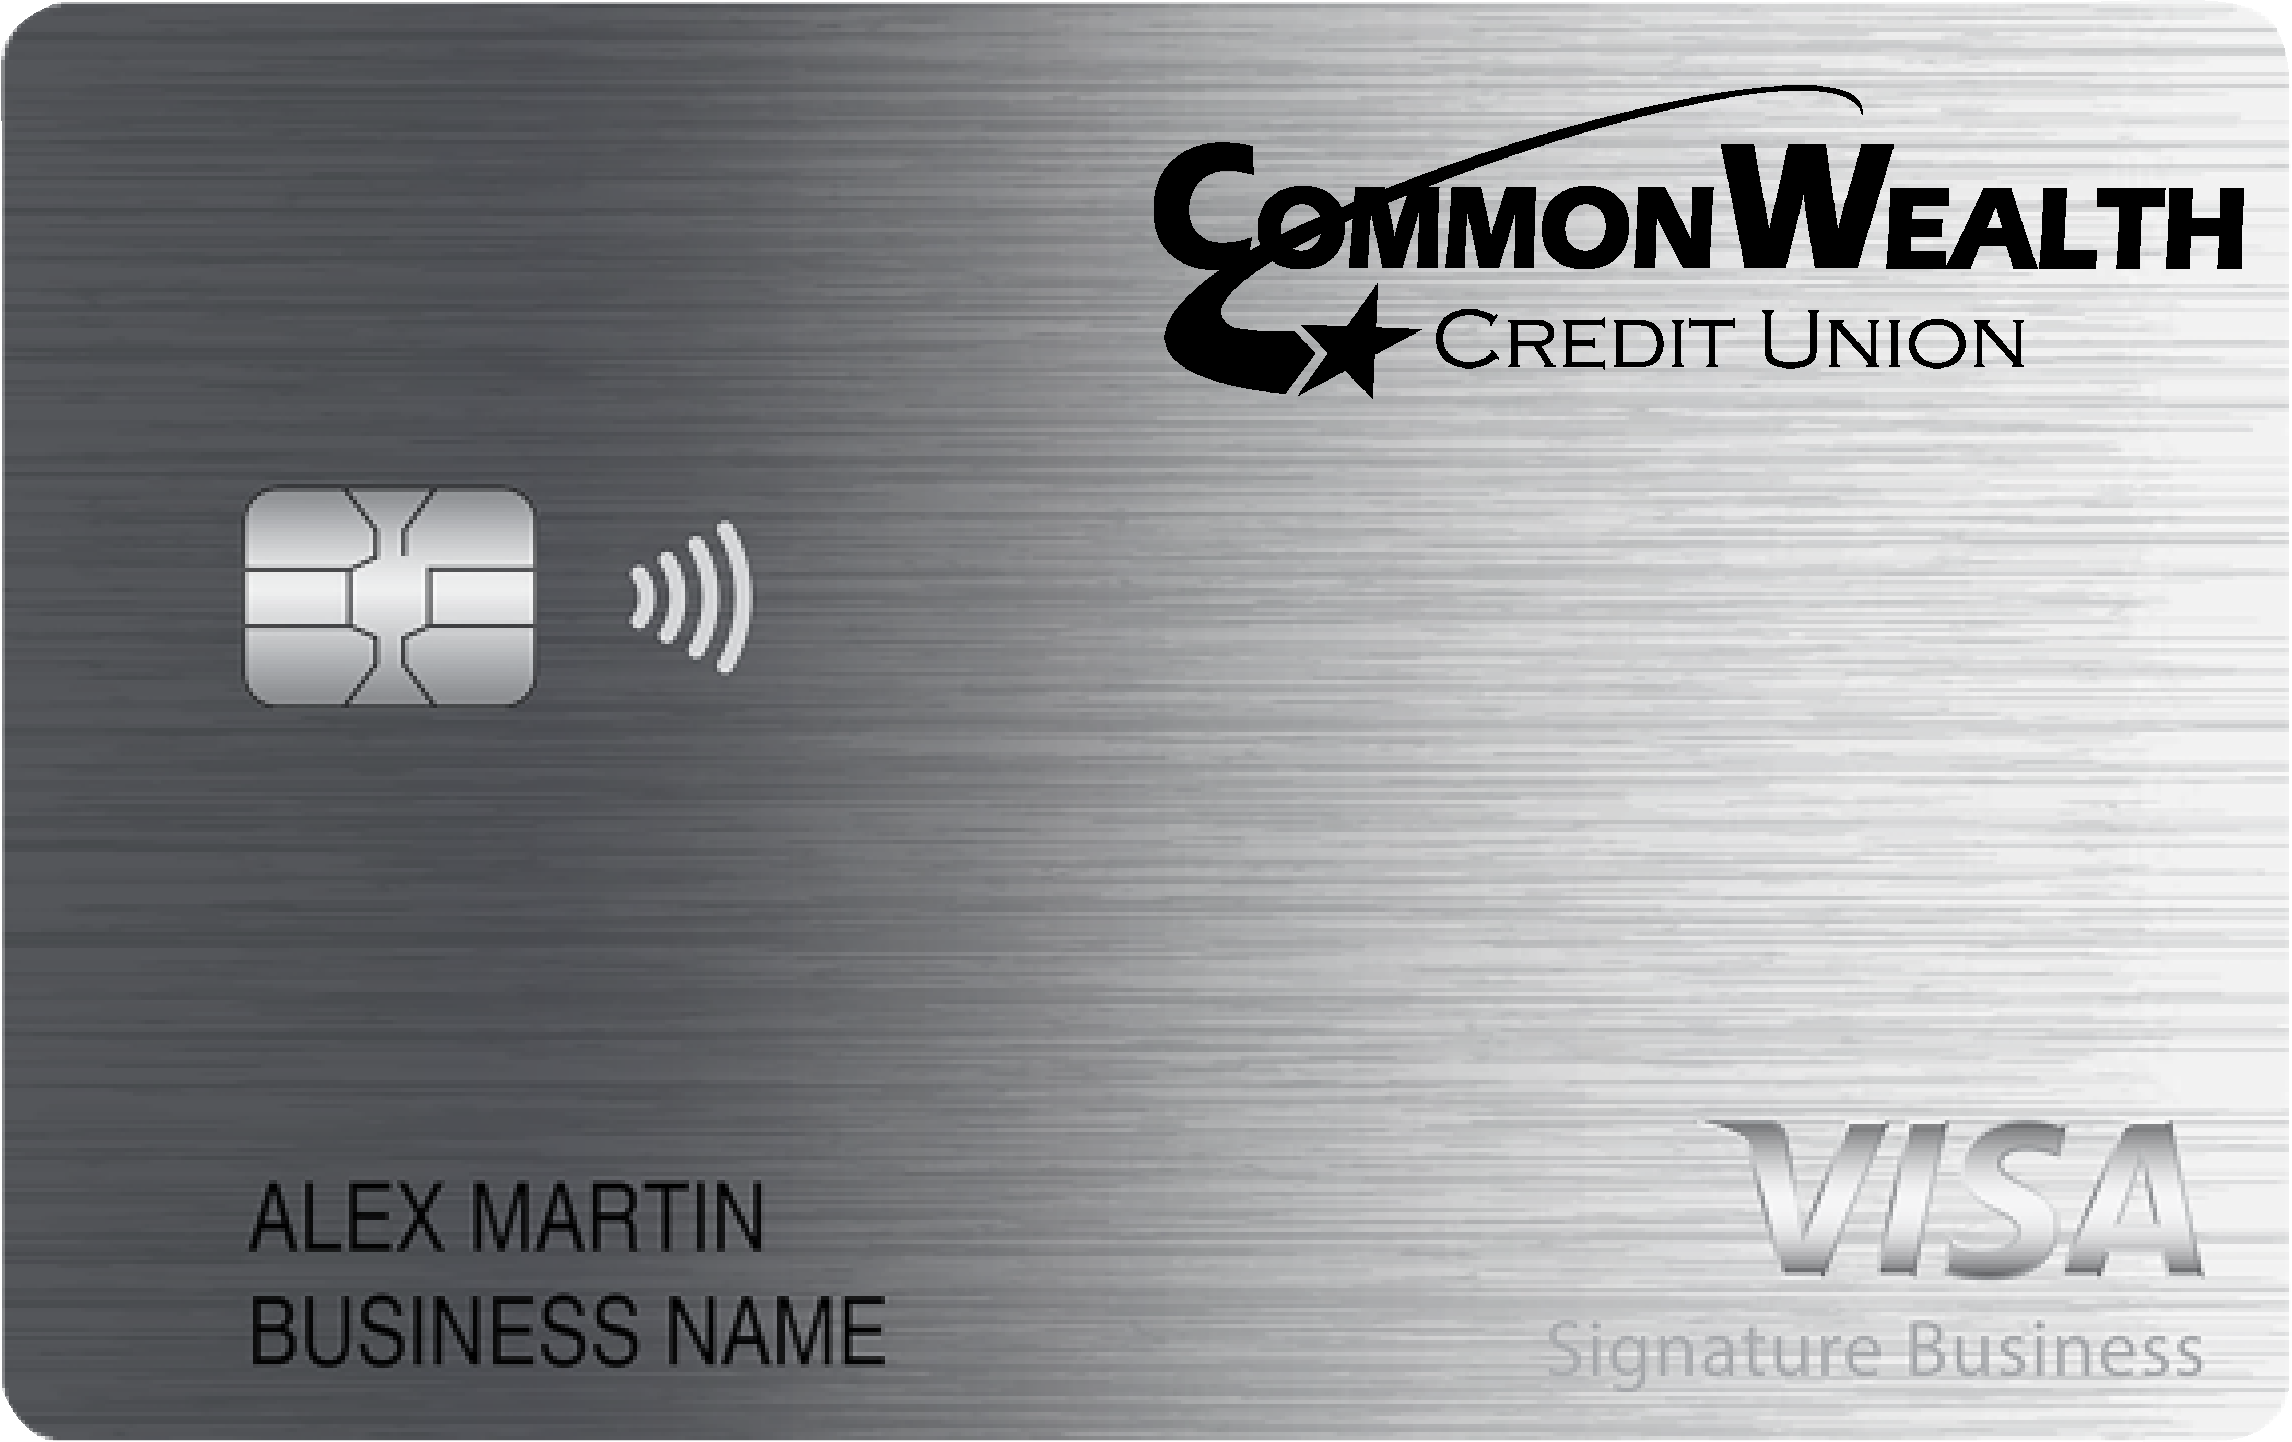 CommonWealth Credit Union Smart Business Rewards Card